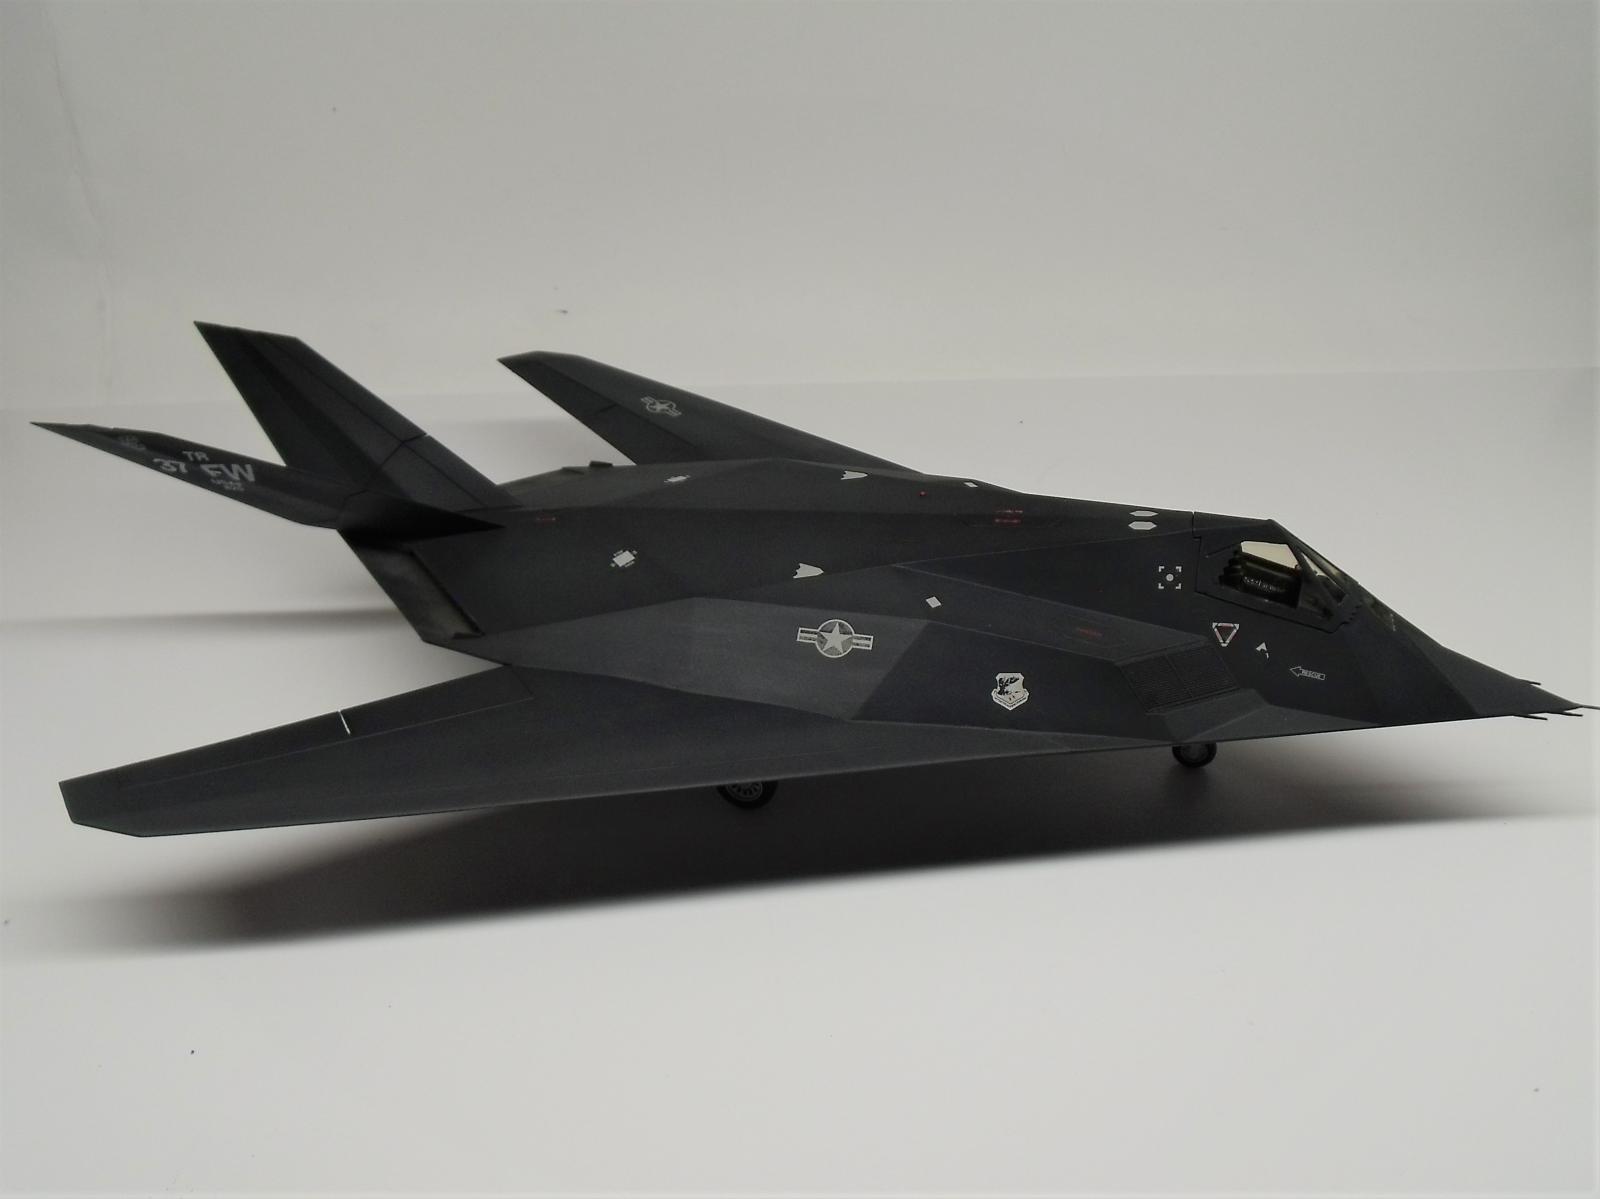 Aires 1/48 F-117A Nighthawk Bomb Bay for Tamiya kit # 4382 